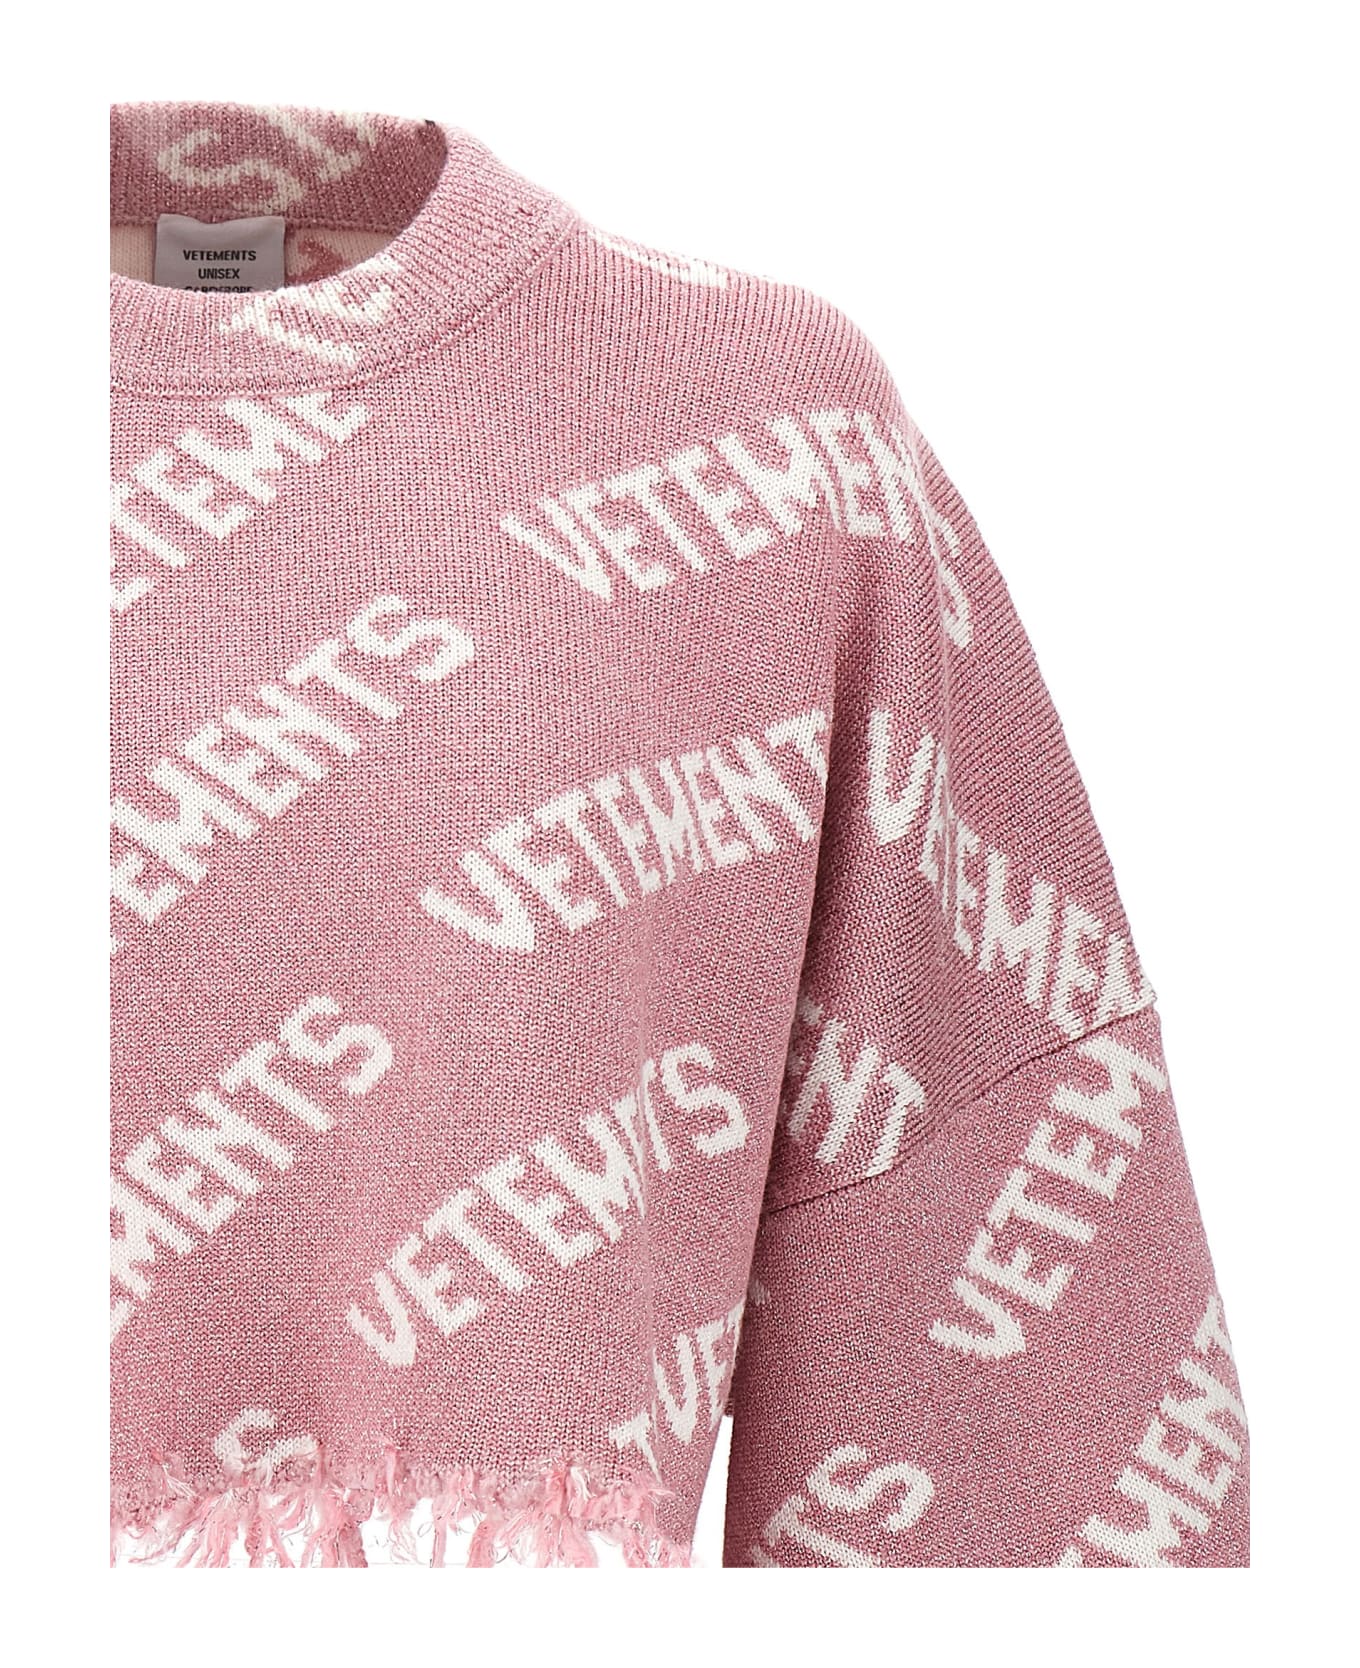 VETEMENTS 'iconic Lurex Monogram' Crop Sweater - Pink